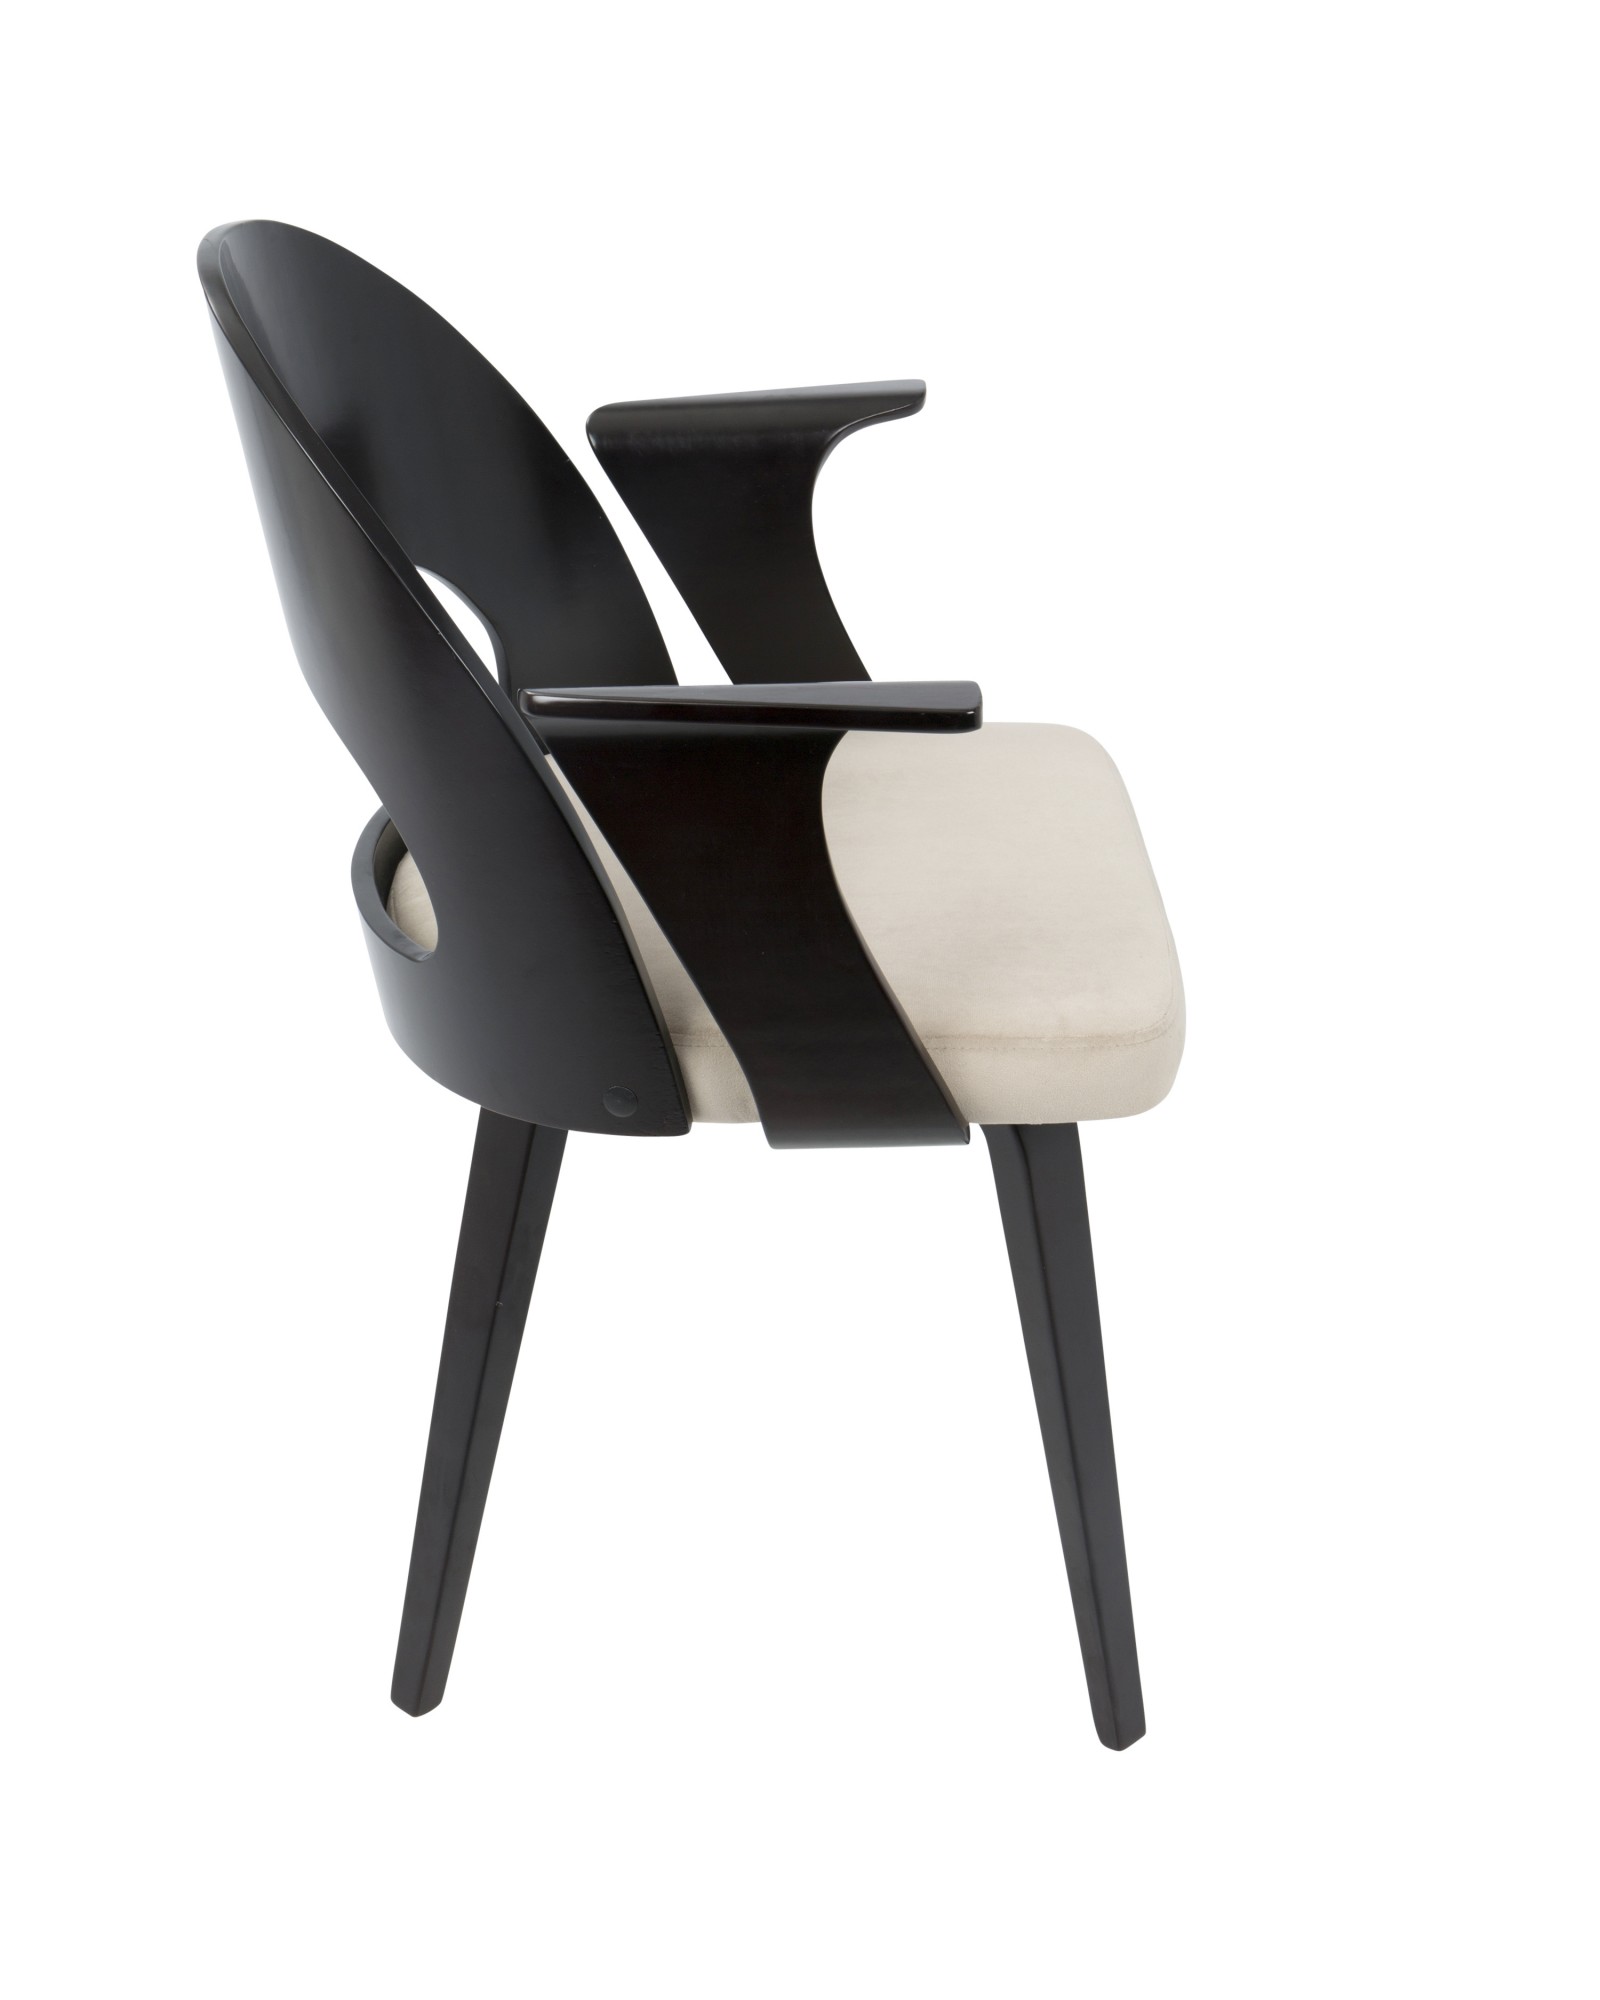 Verino Mid-Century Modern Dining/Accent Chair in Espresso with Light Brown Velvet